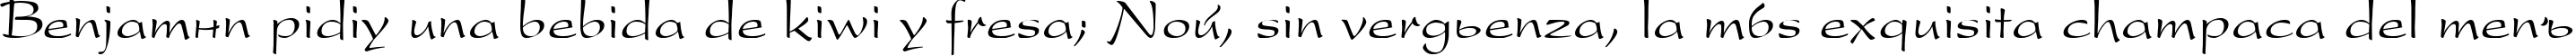 Пример написания шрифтом Sakura текста на испанском